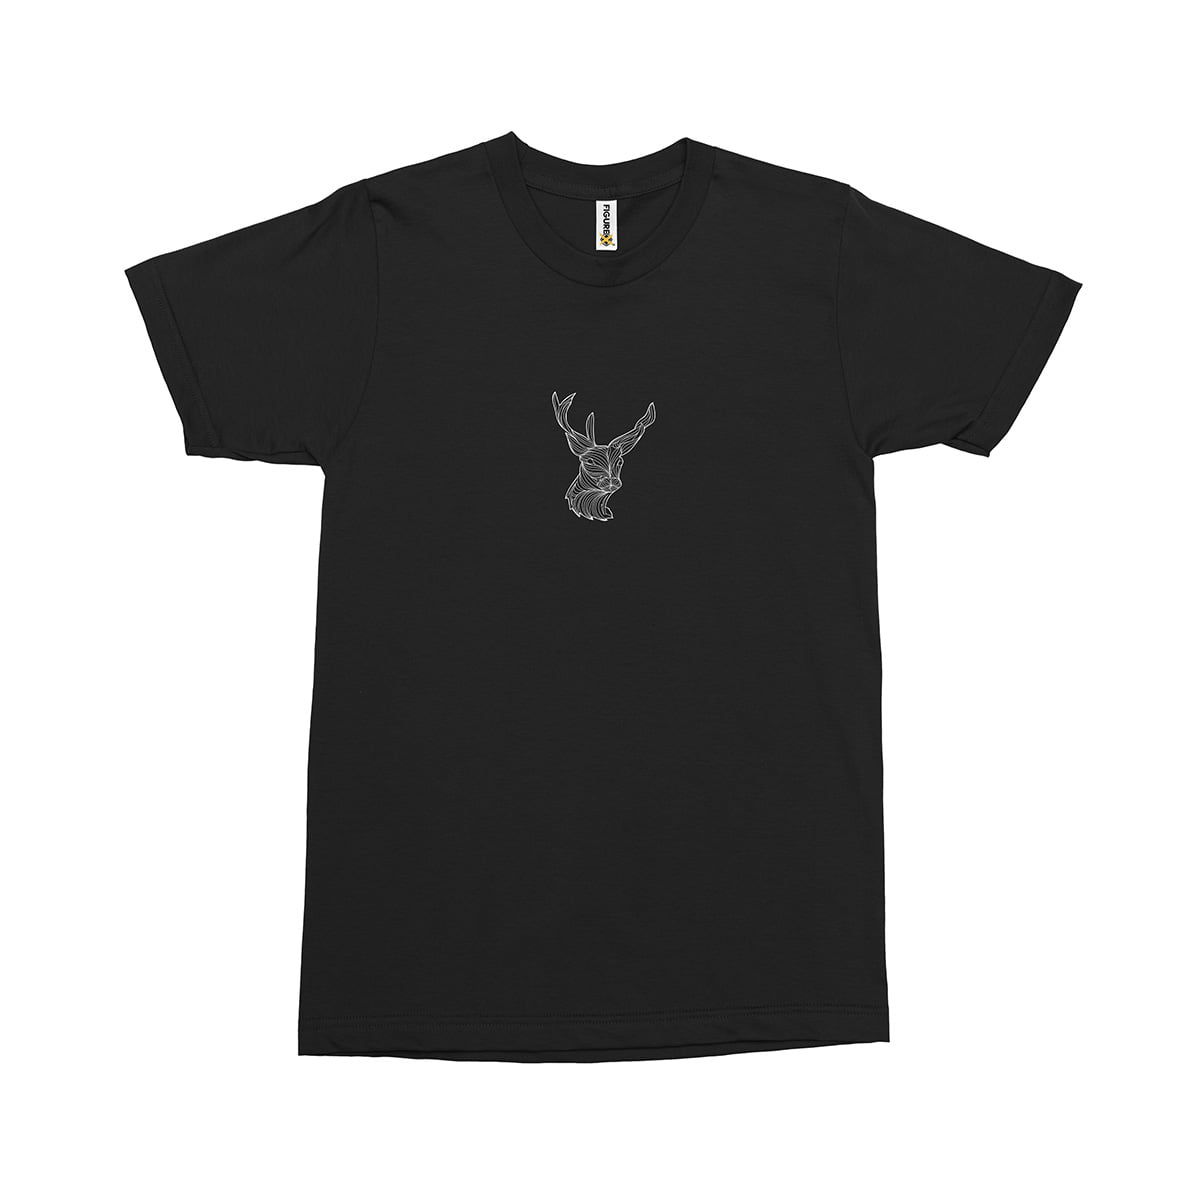 Orjinal geyik mandala beyaz fxsca2192c erkek tshirt siyah orta kucuk - geyik mandala baskılı erkek t-shirt - figurex